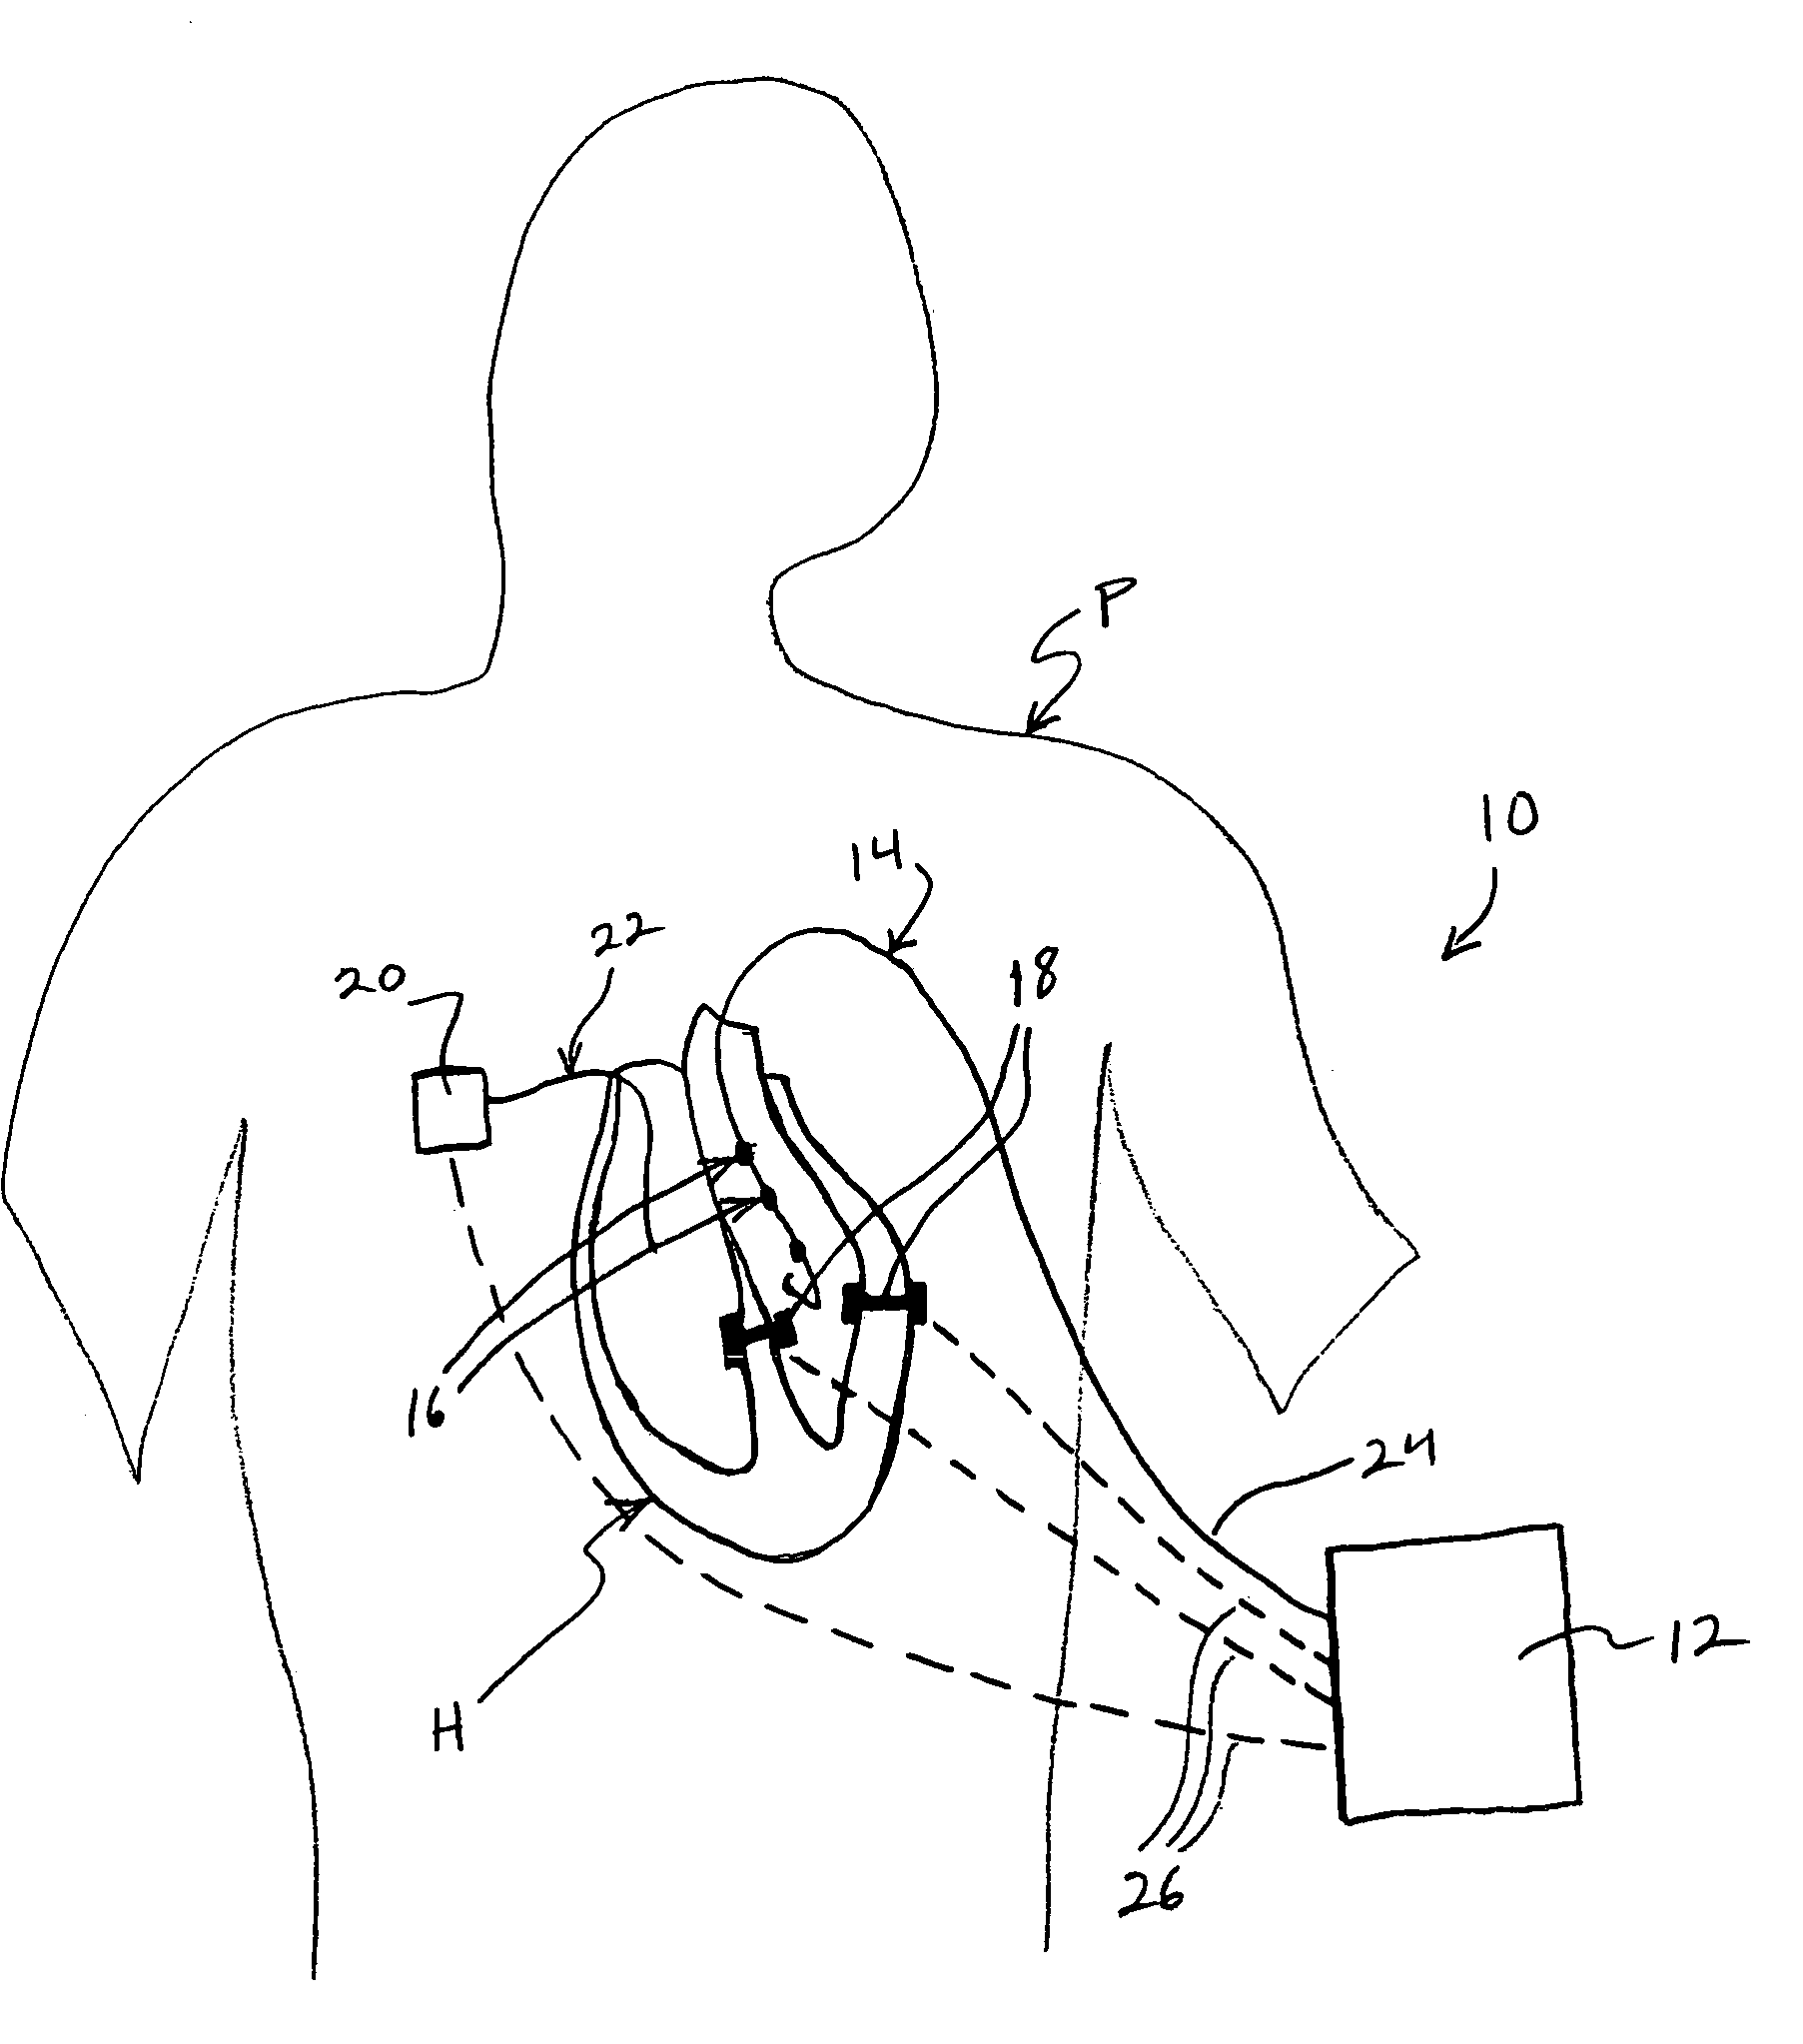 Method and apparatus for enhancing cardiac pacing